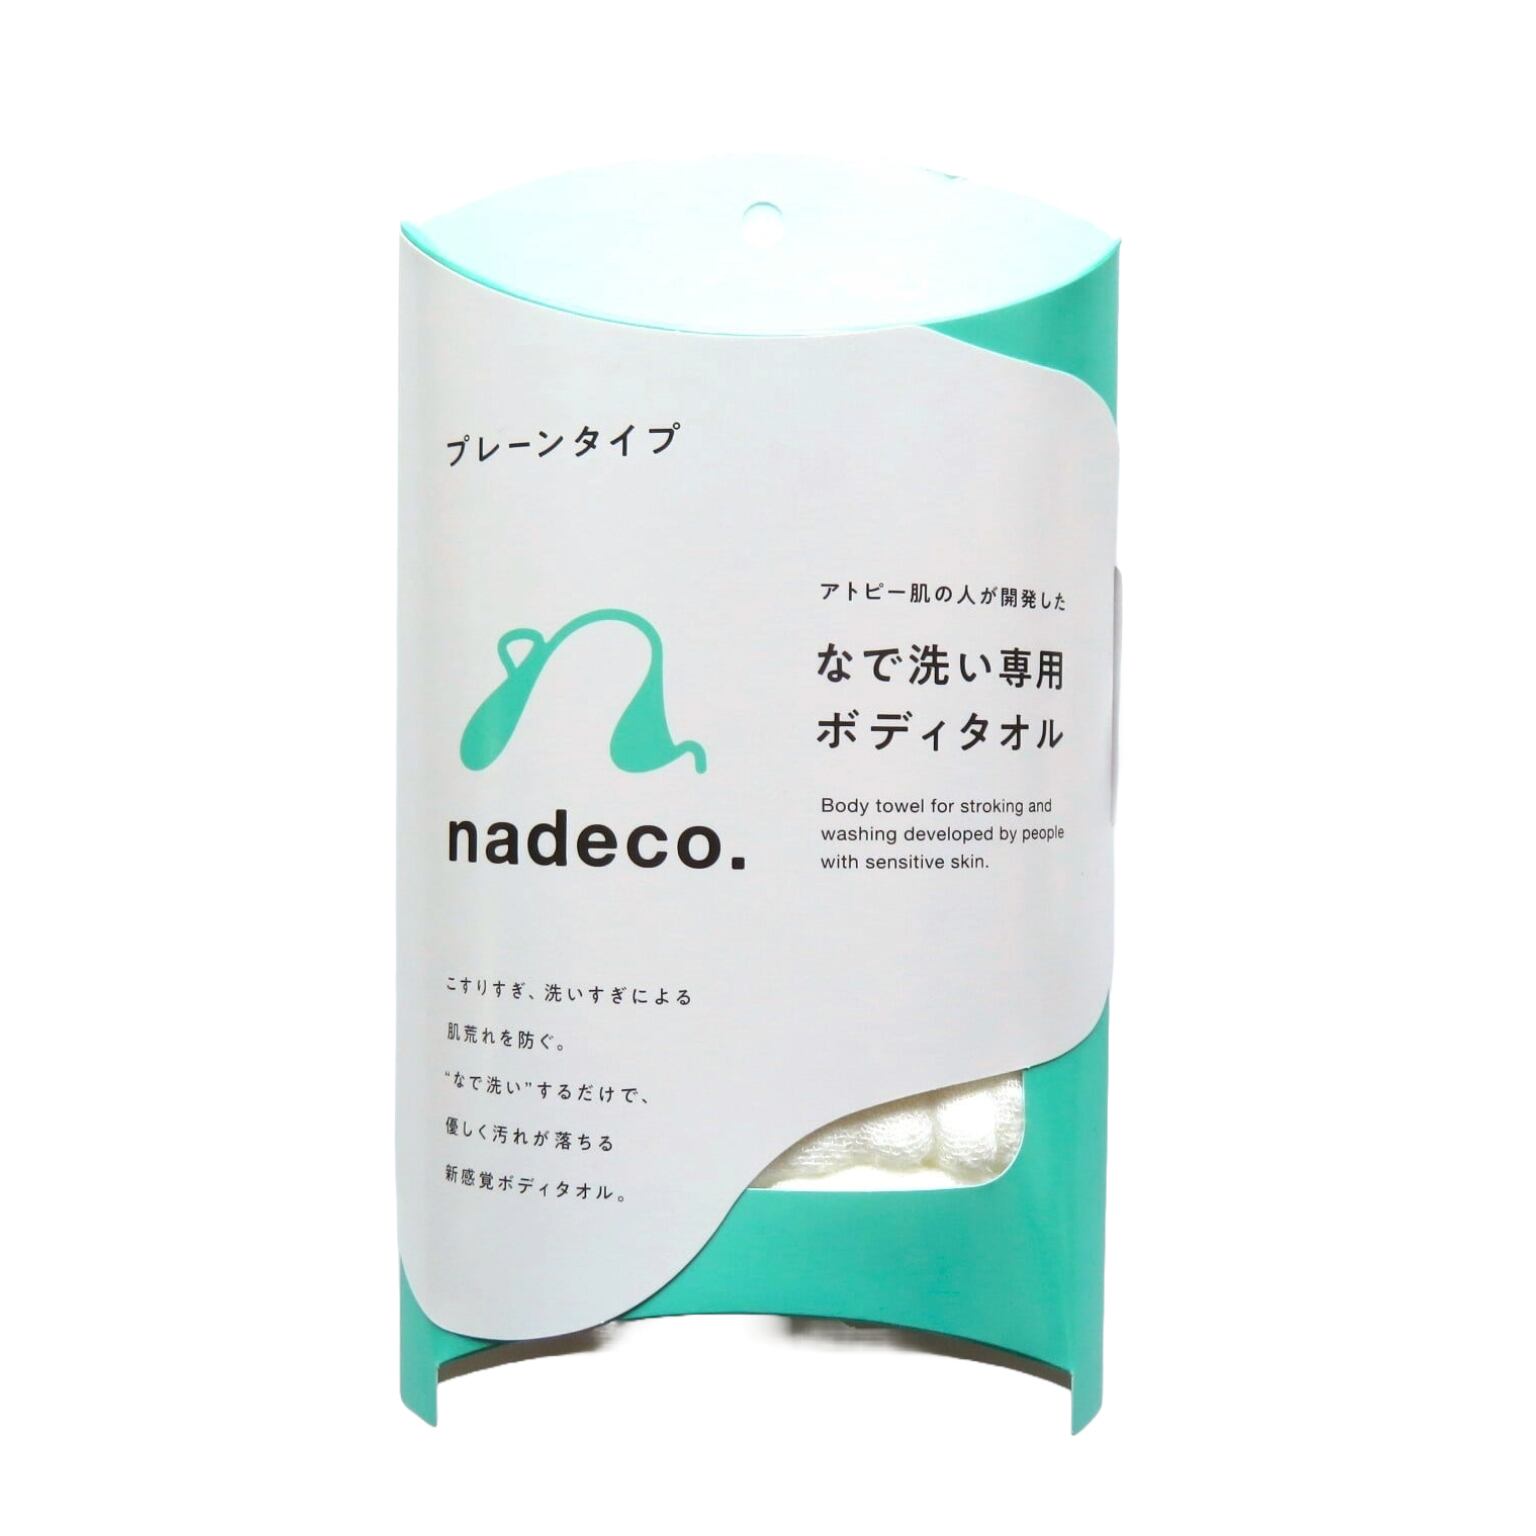 nadeco. アトピー肌の人が開発したなで洗い専用ボディタオル プレーン